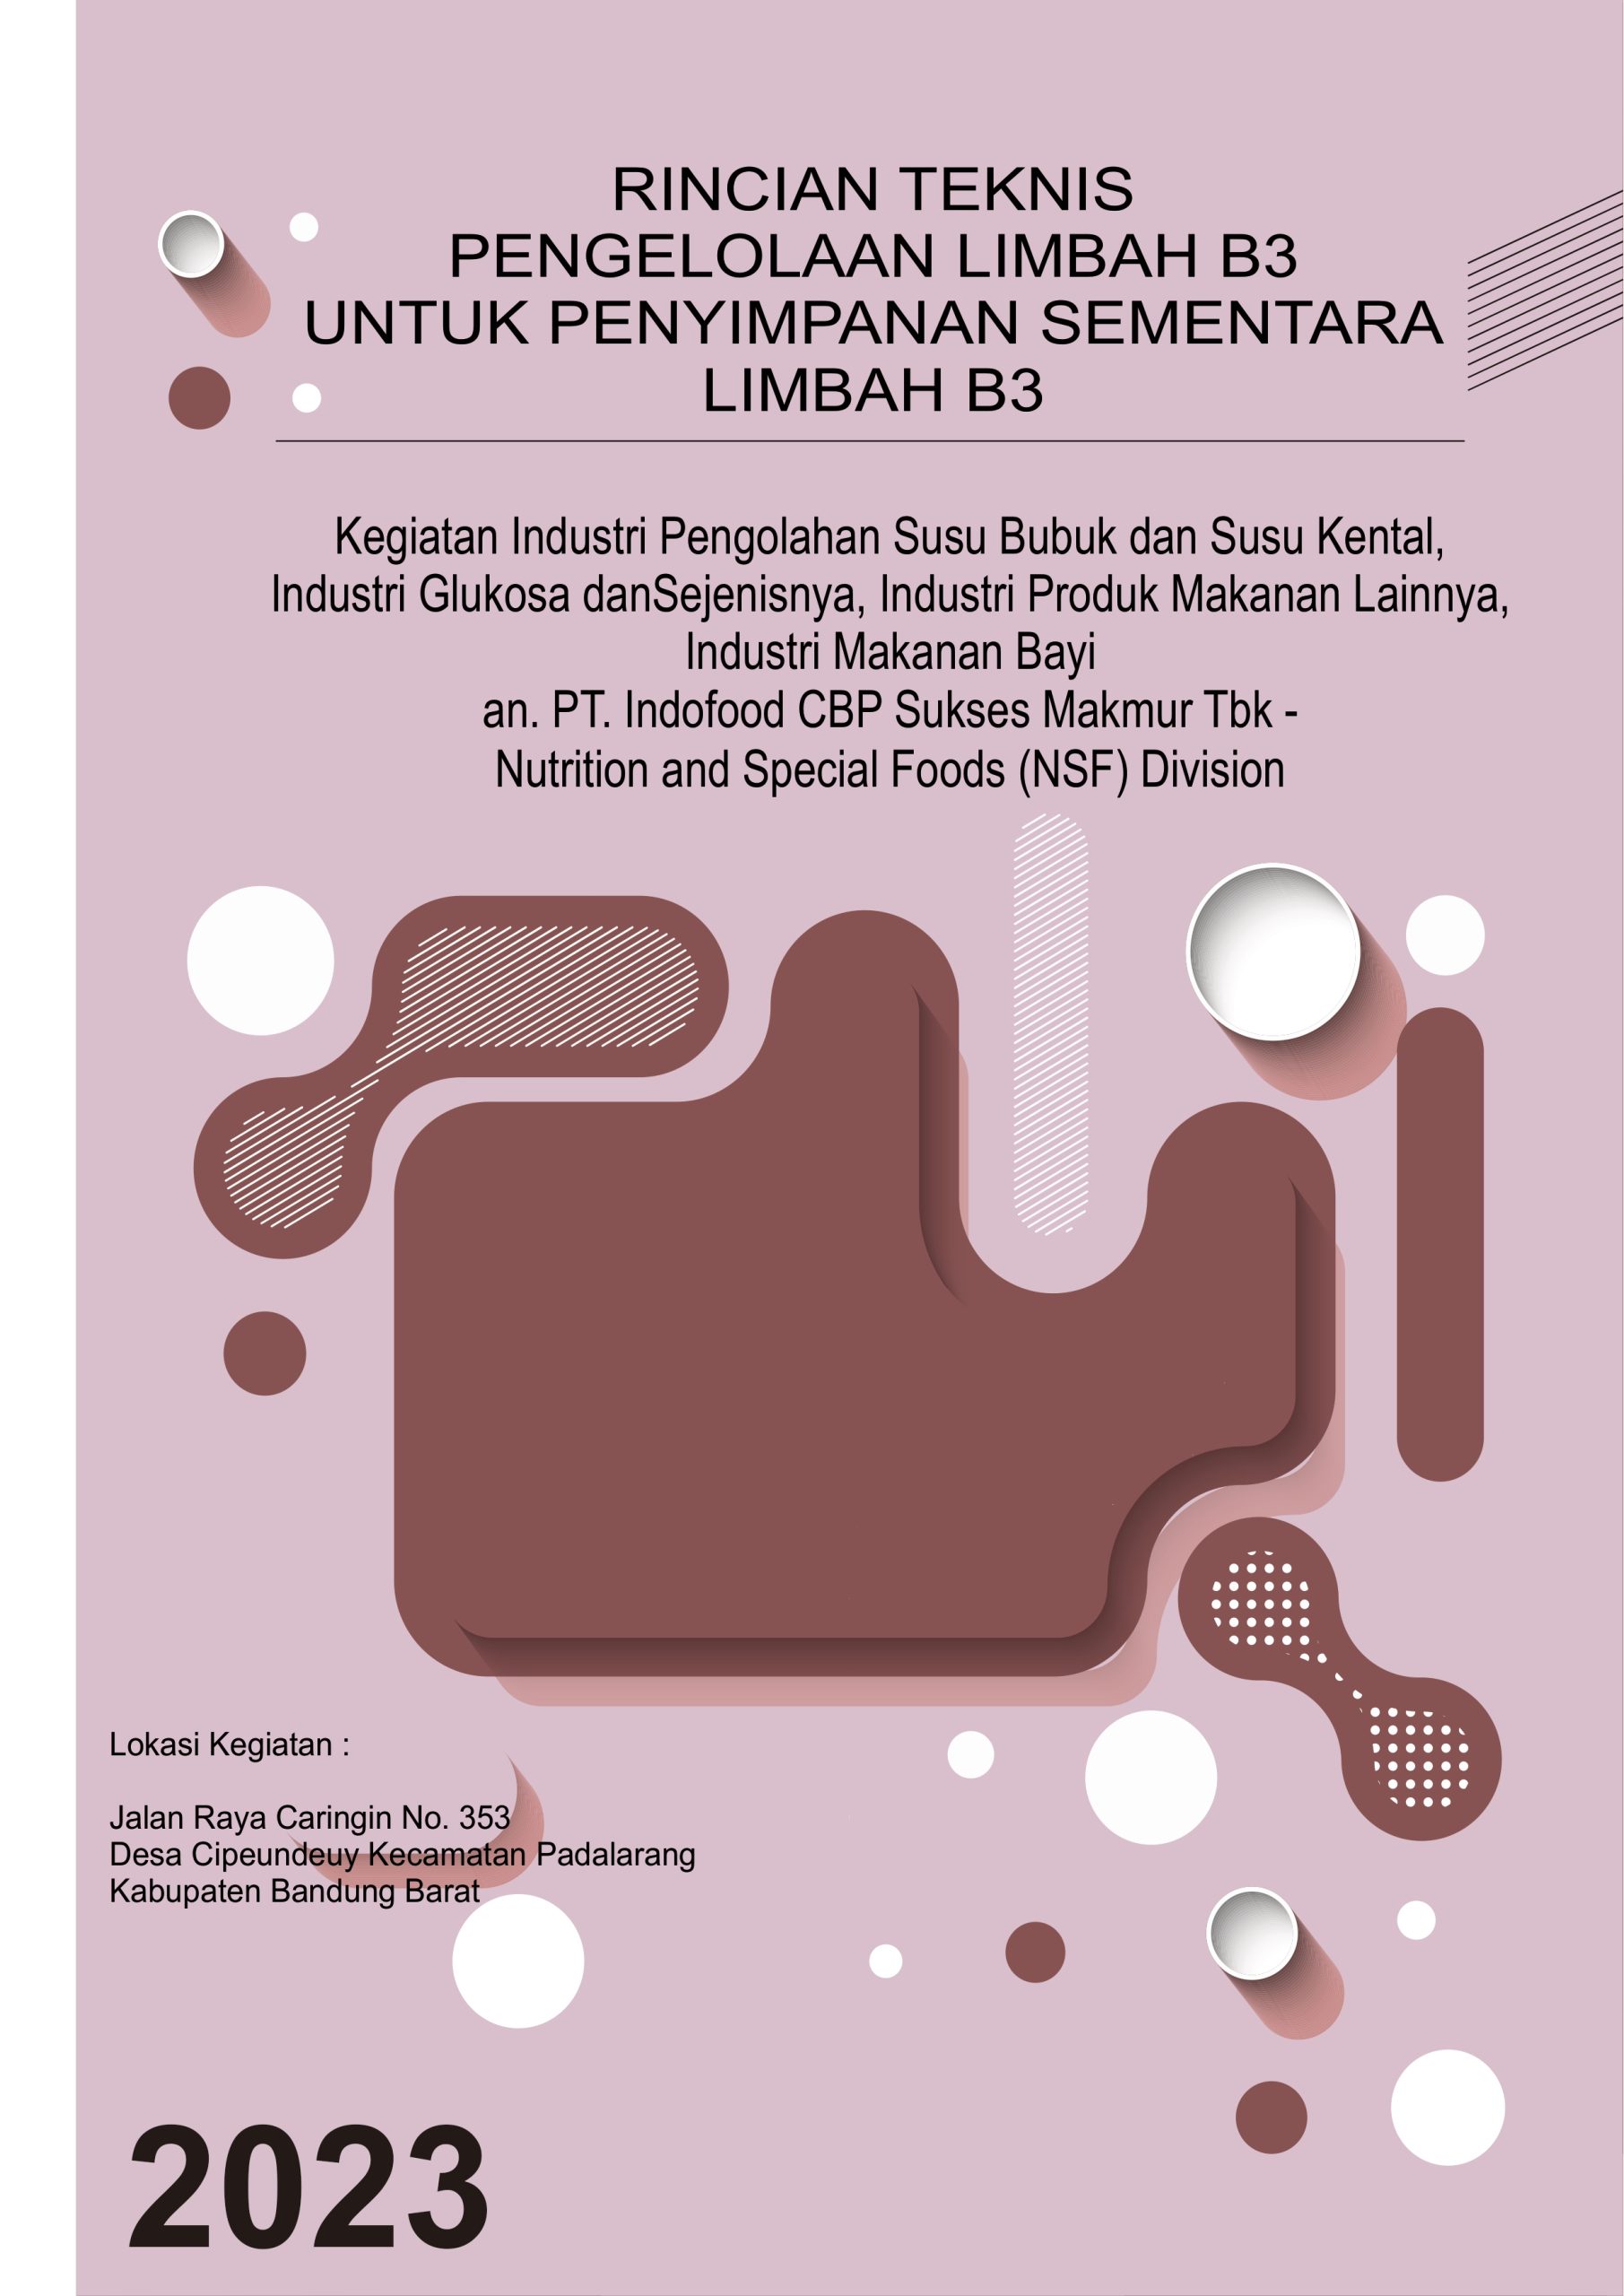 Rintek TPS Limbah B3 PT Indofood CBP Sukses Makmur Tbk – NSF Division